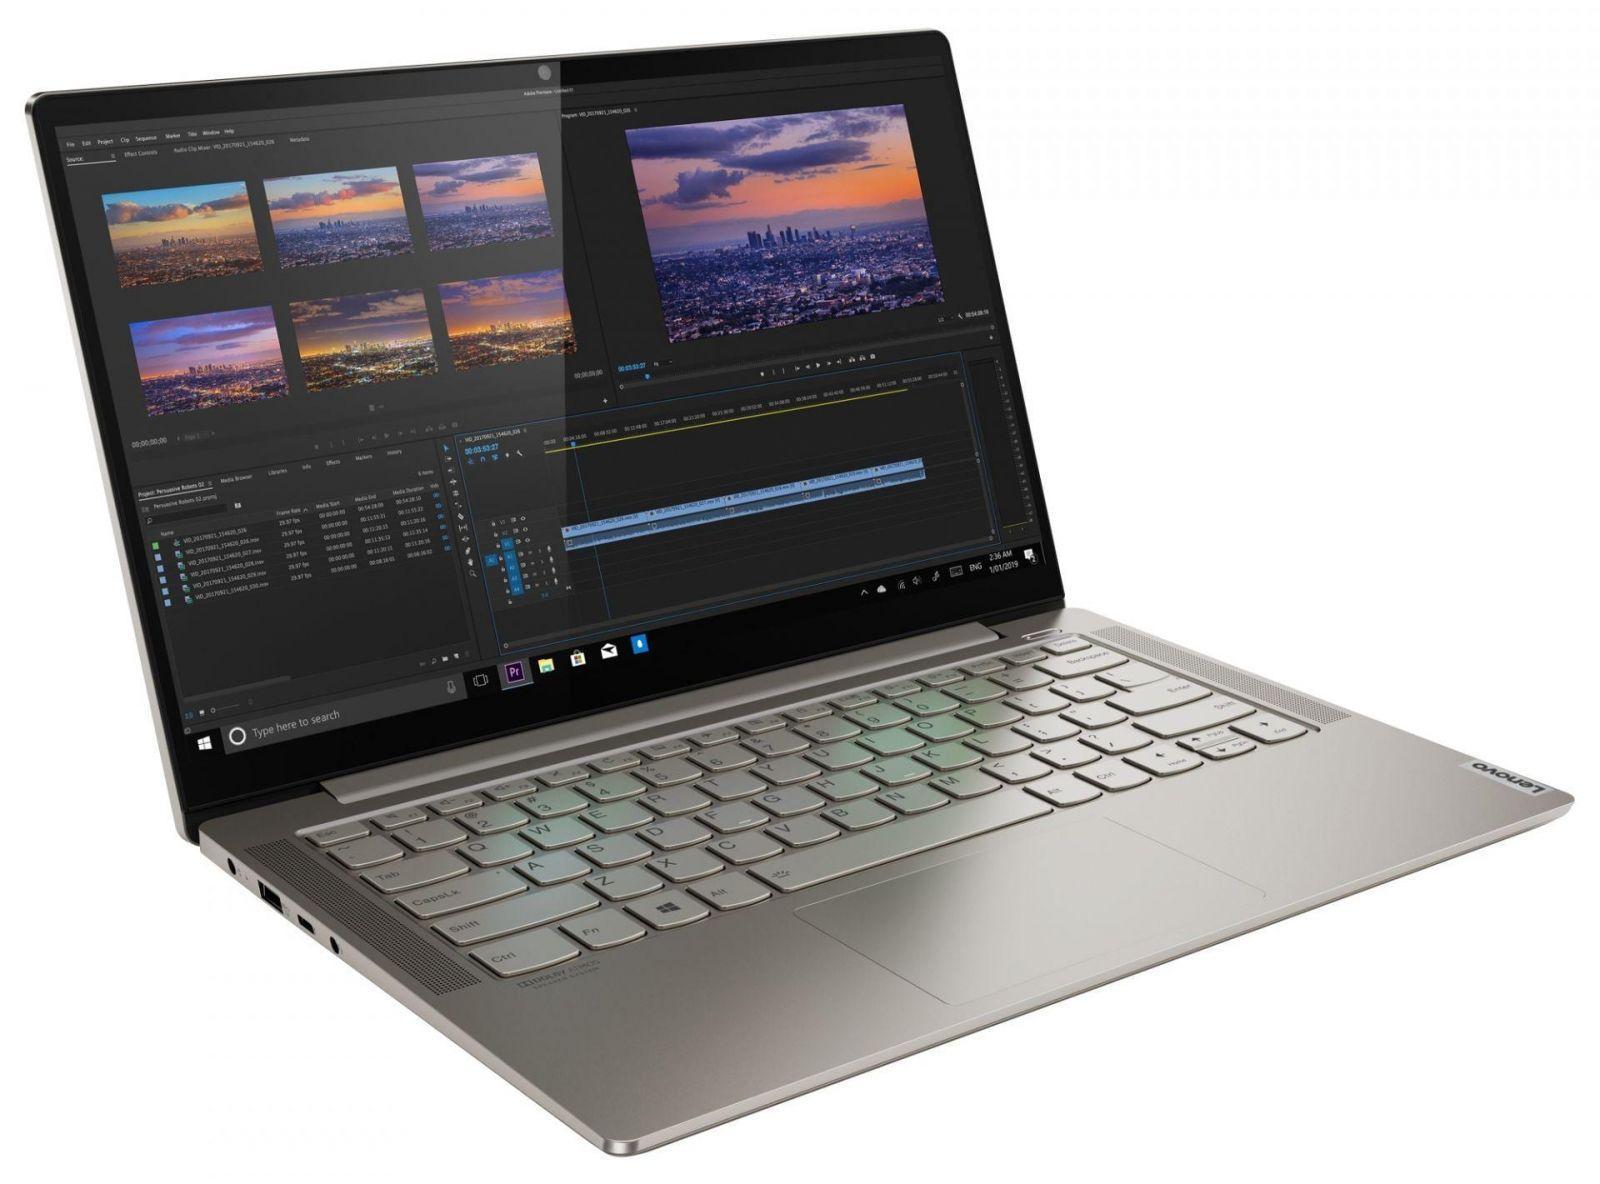 Lenovo представила ноутбук-трансформер Yoga С740 на российском рынке (yoga s740 14inch)